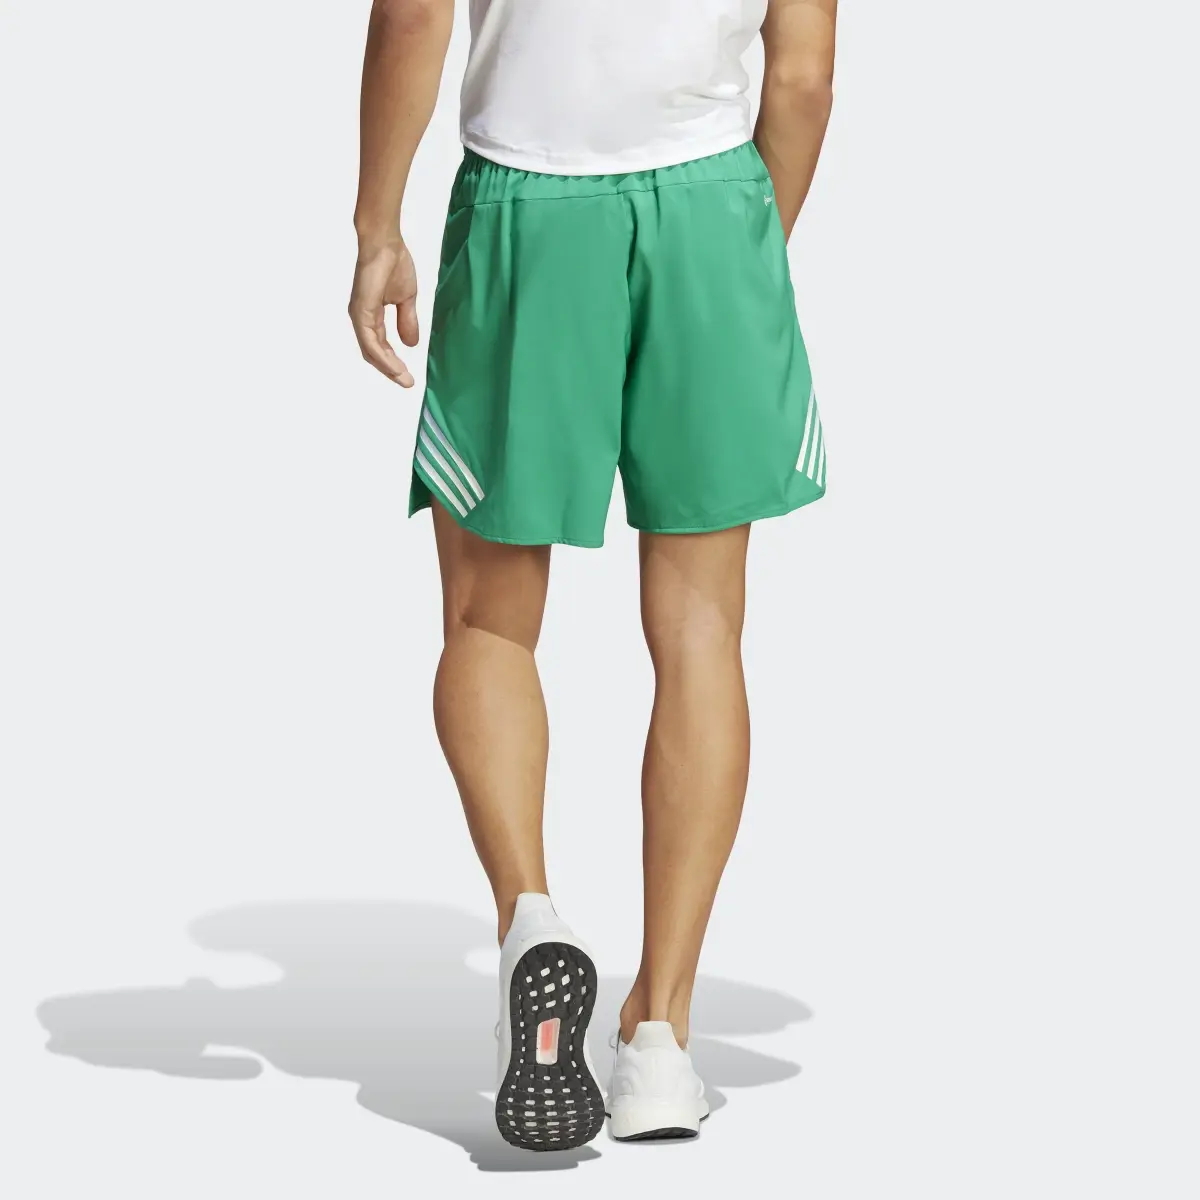 Adidas Train Icons 3-Stripes Training Shorts. 2